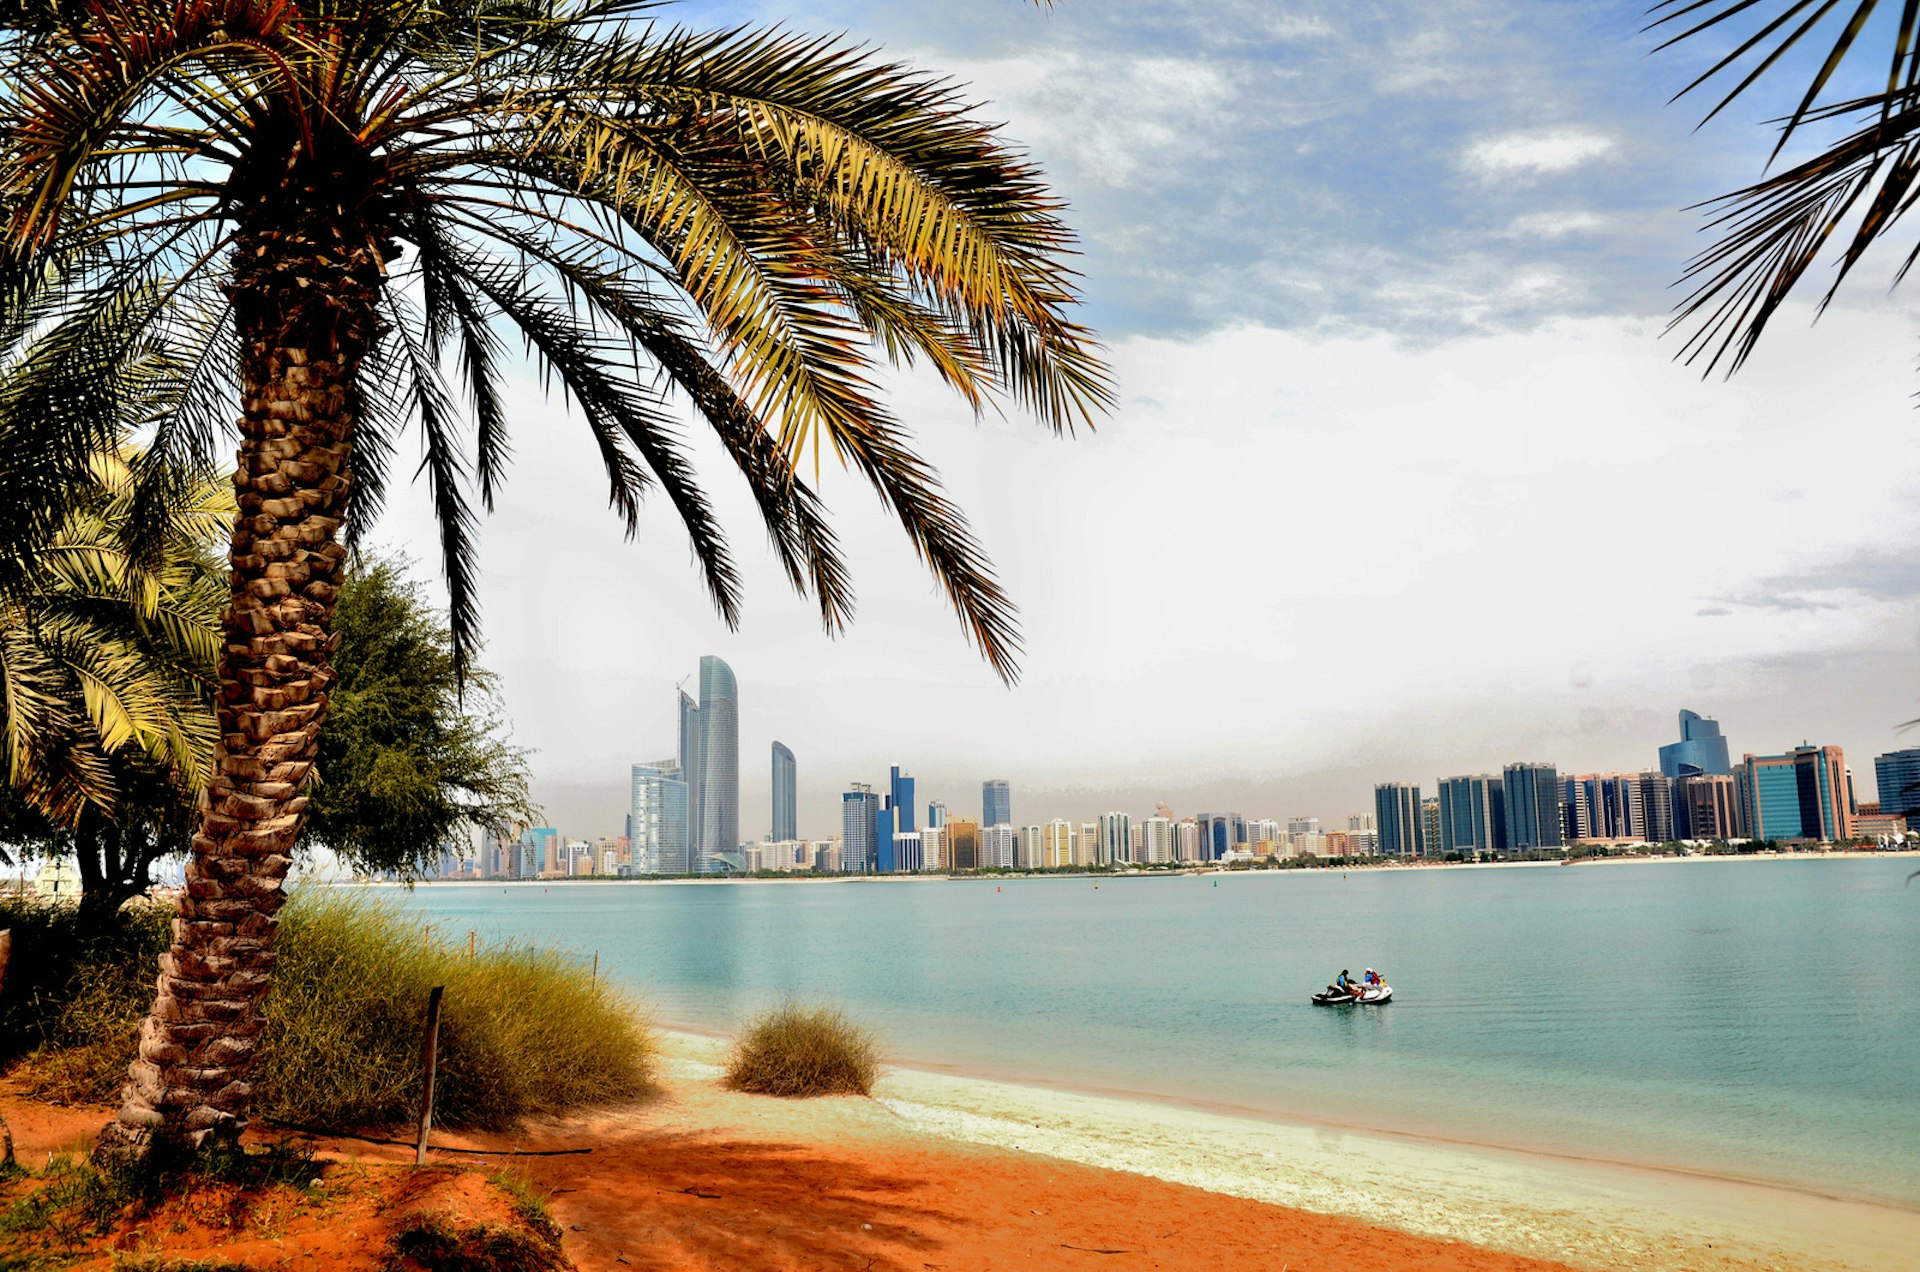 Skyscrapers as seen from a beach in Abu Dhabi, United Arab Emirates. Image by Aleksander Karpenko / Shutterstock